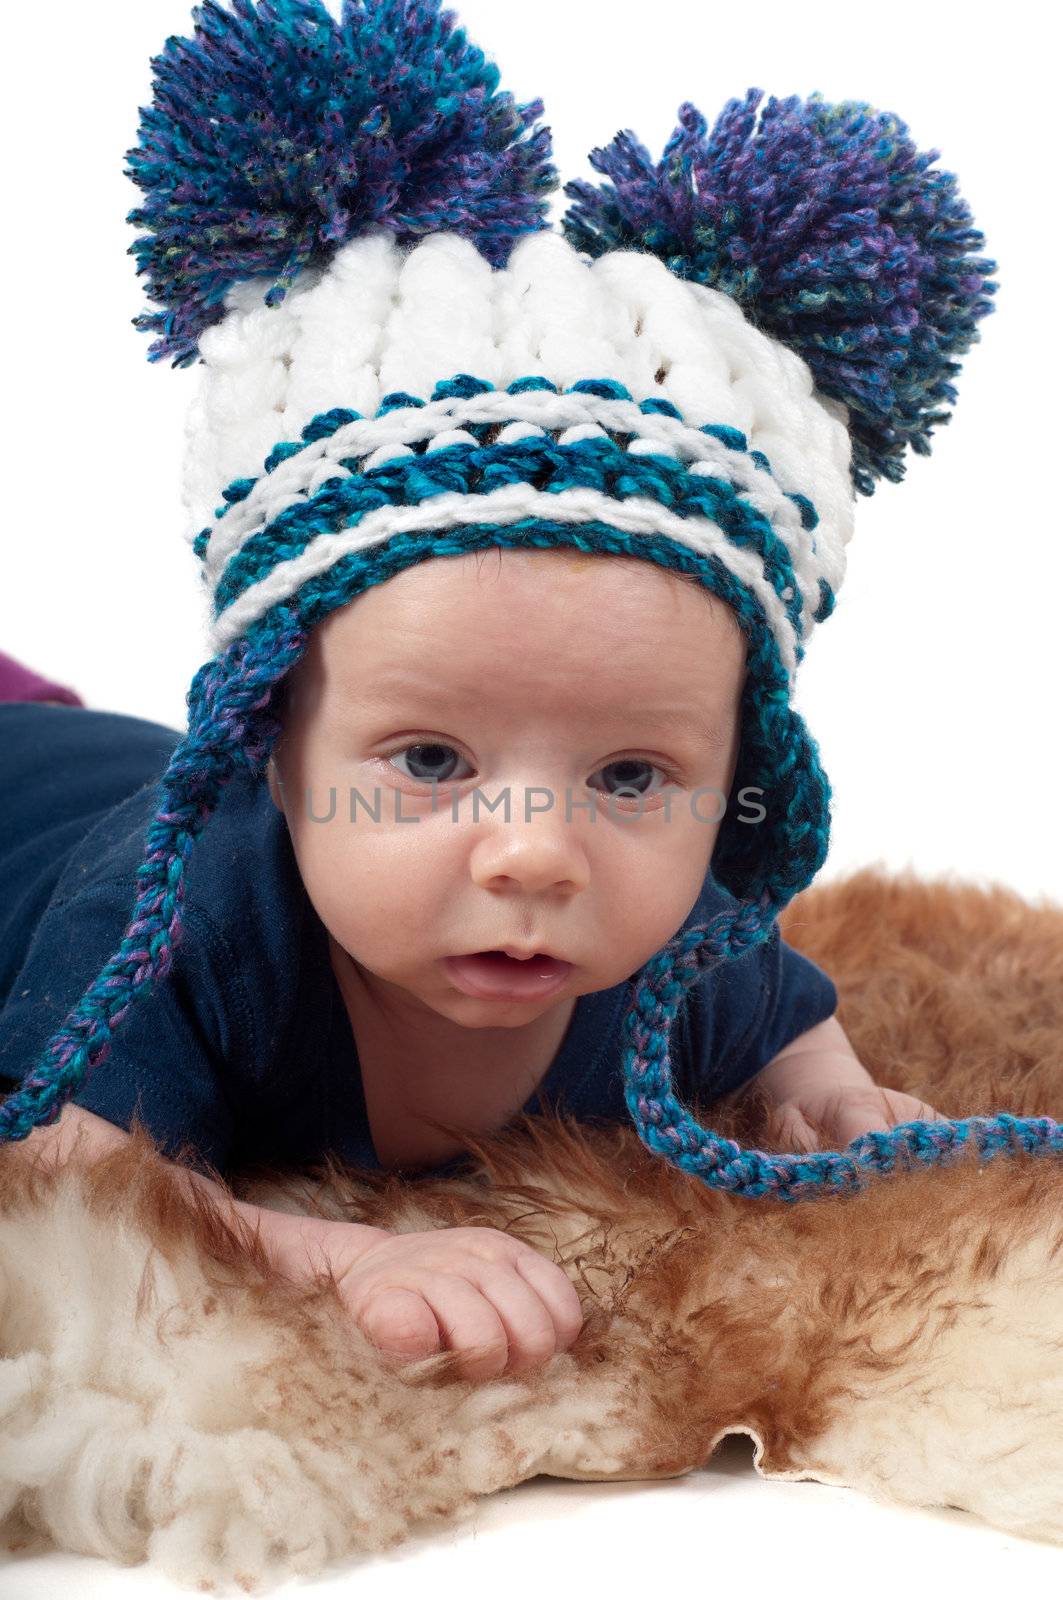 Little baby in pom-pon hat lying on fur